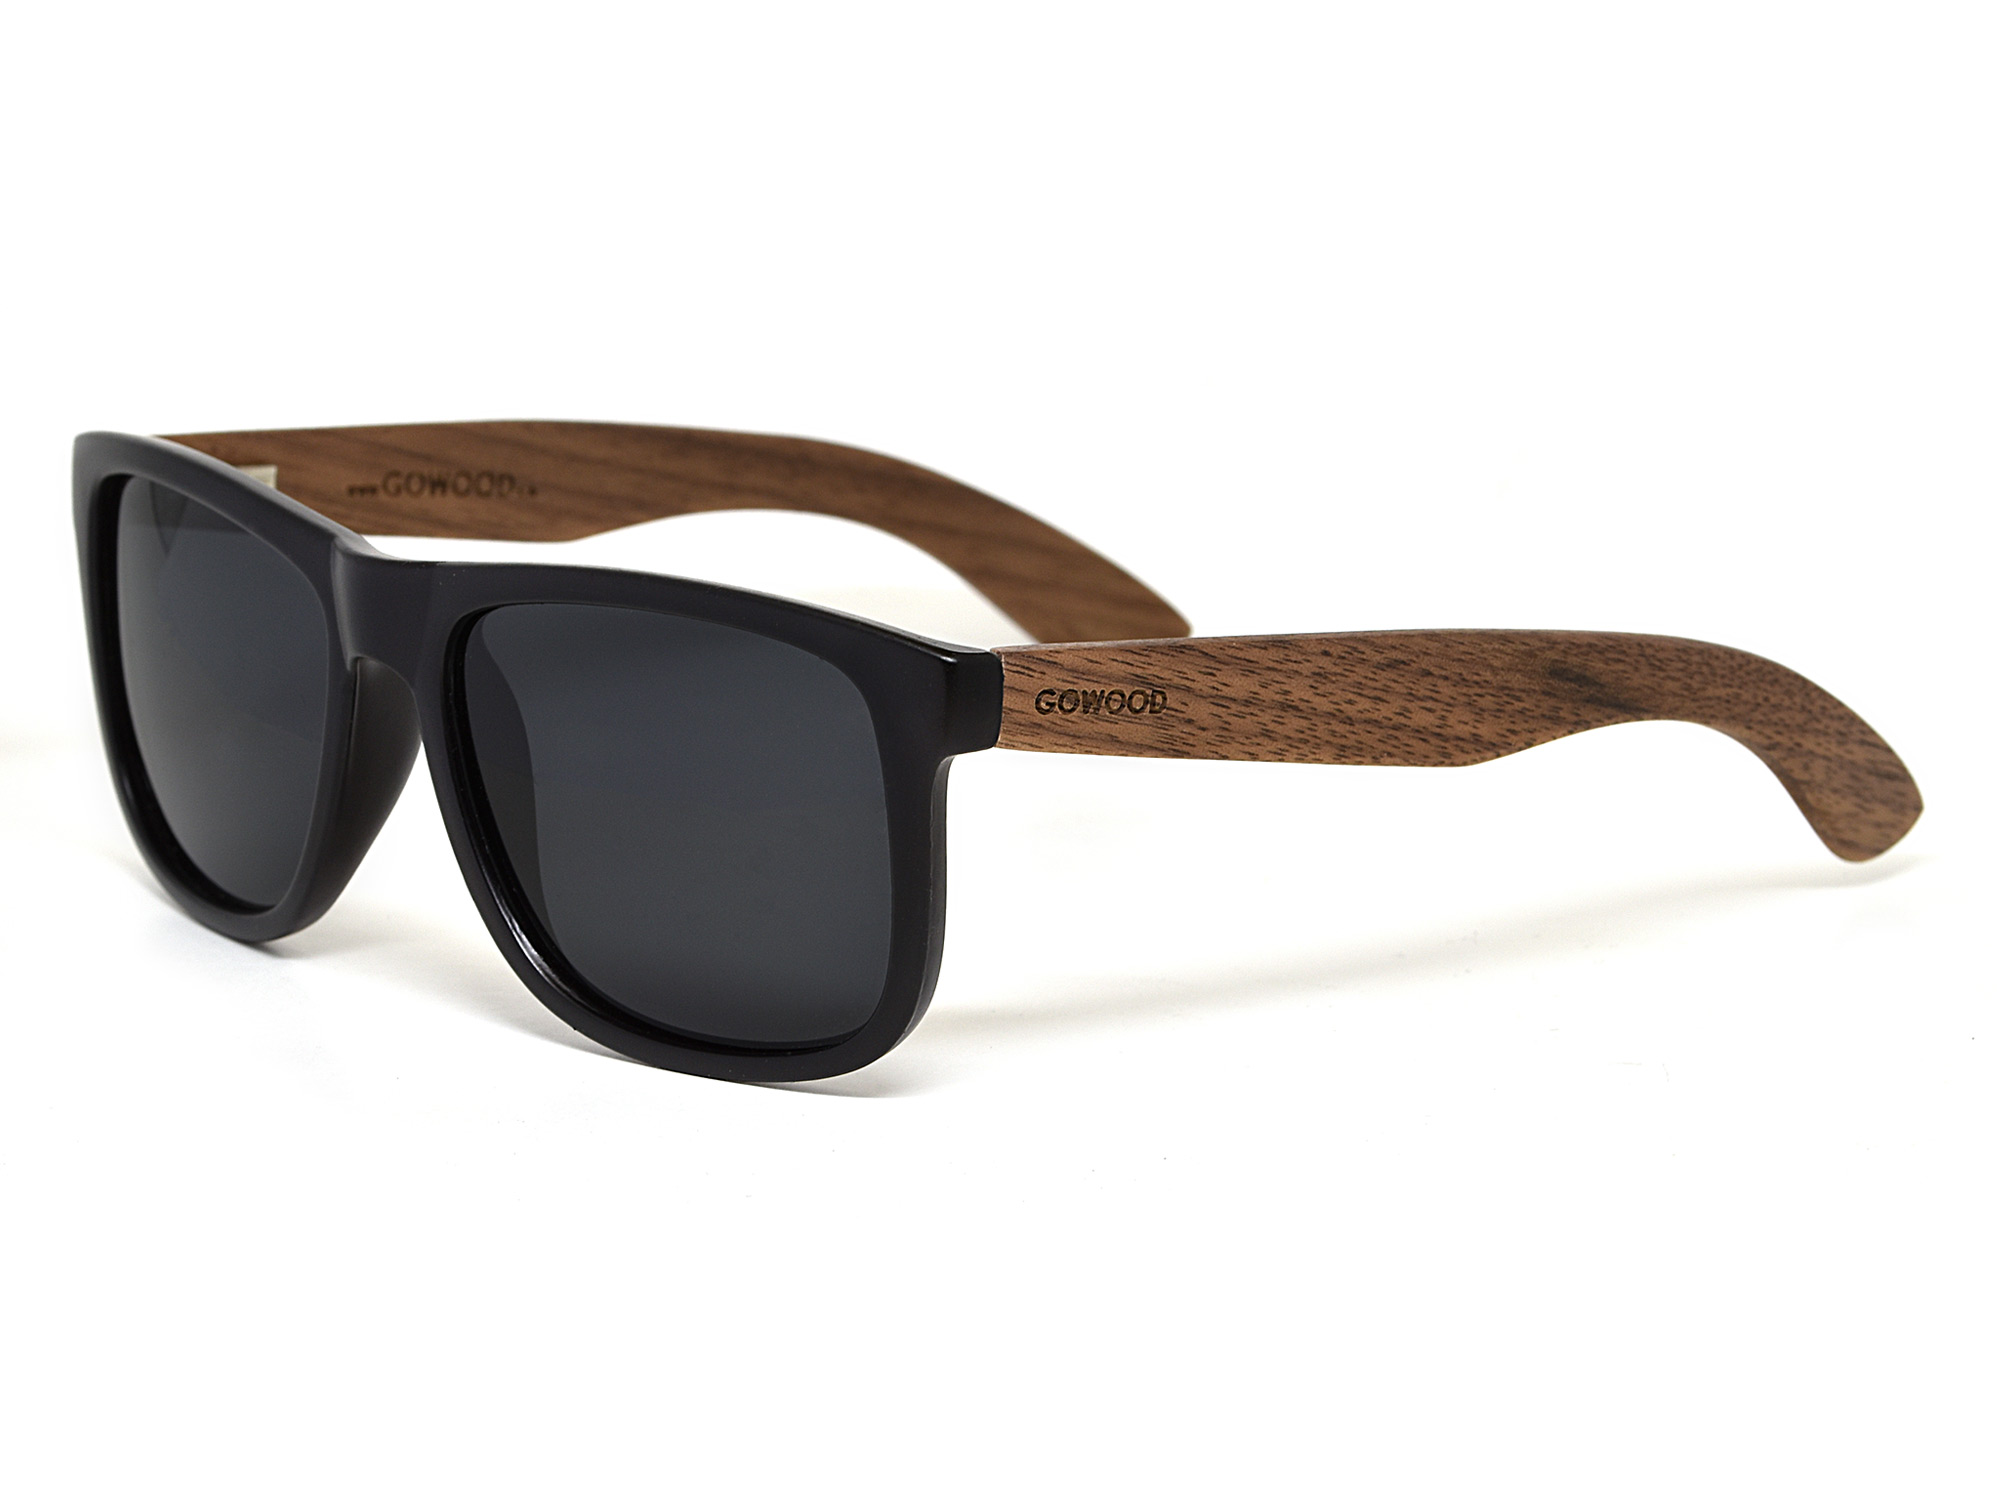 Square walnut wood sunglasses with black polarized lenses